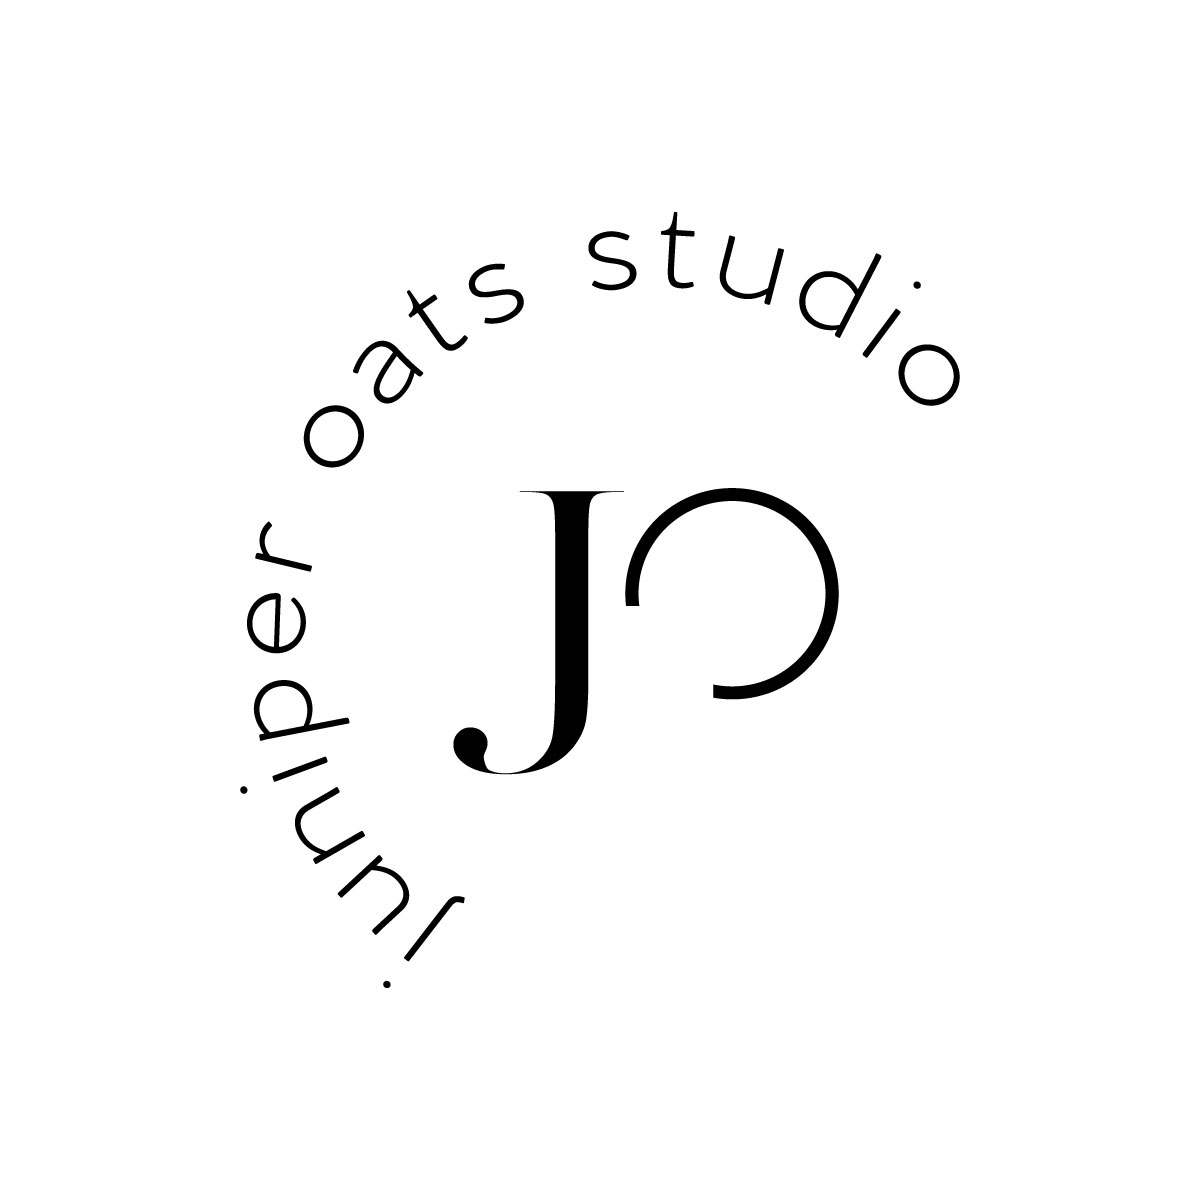 Juniper Studio Logo